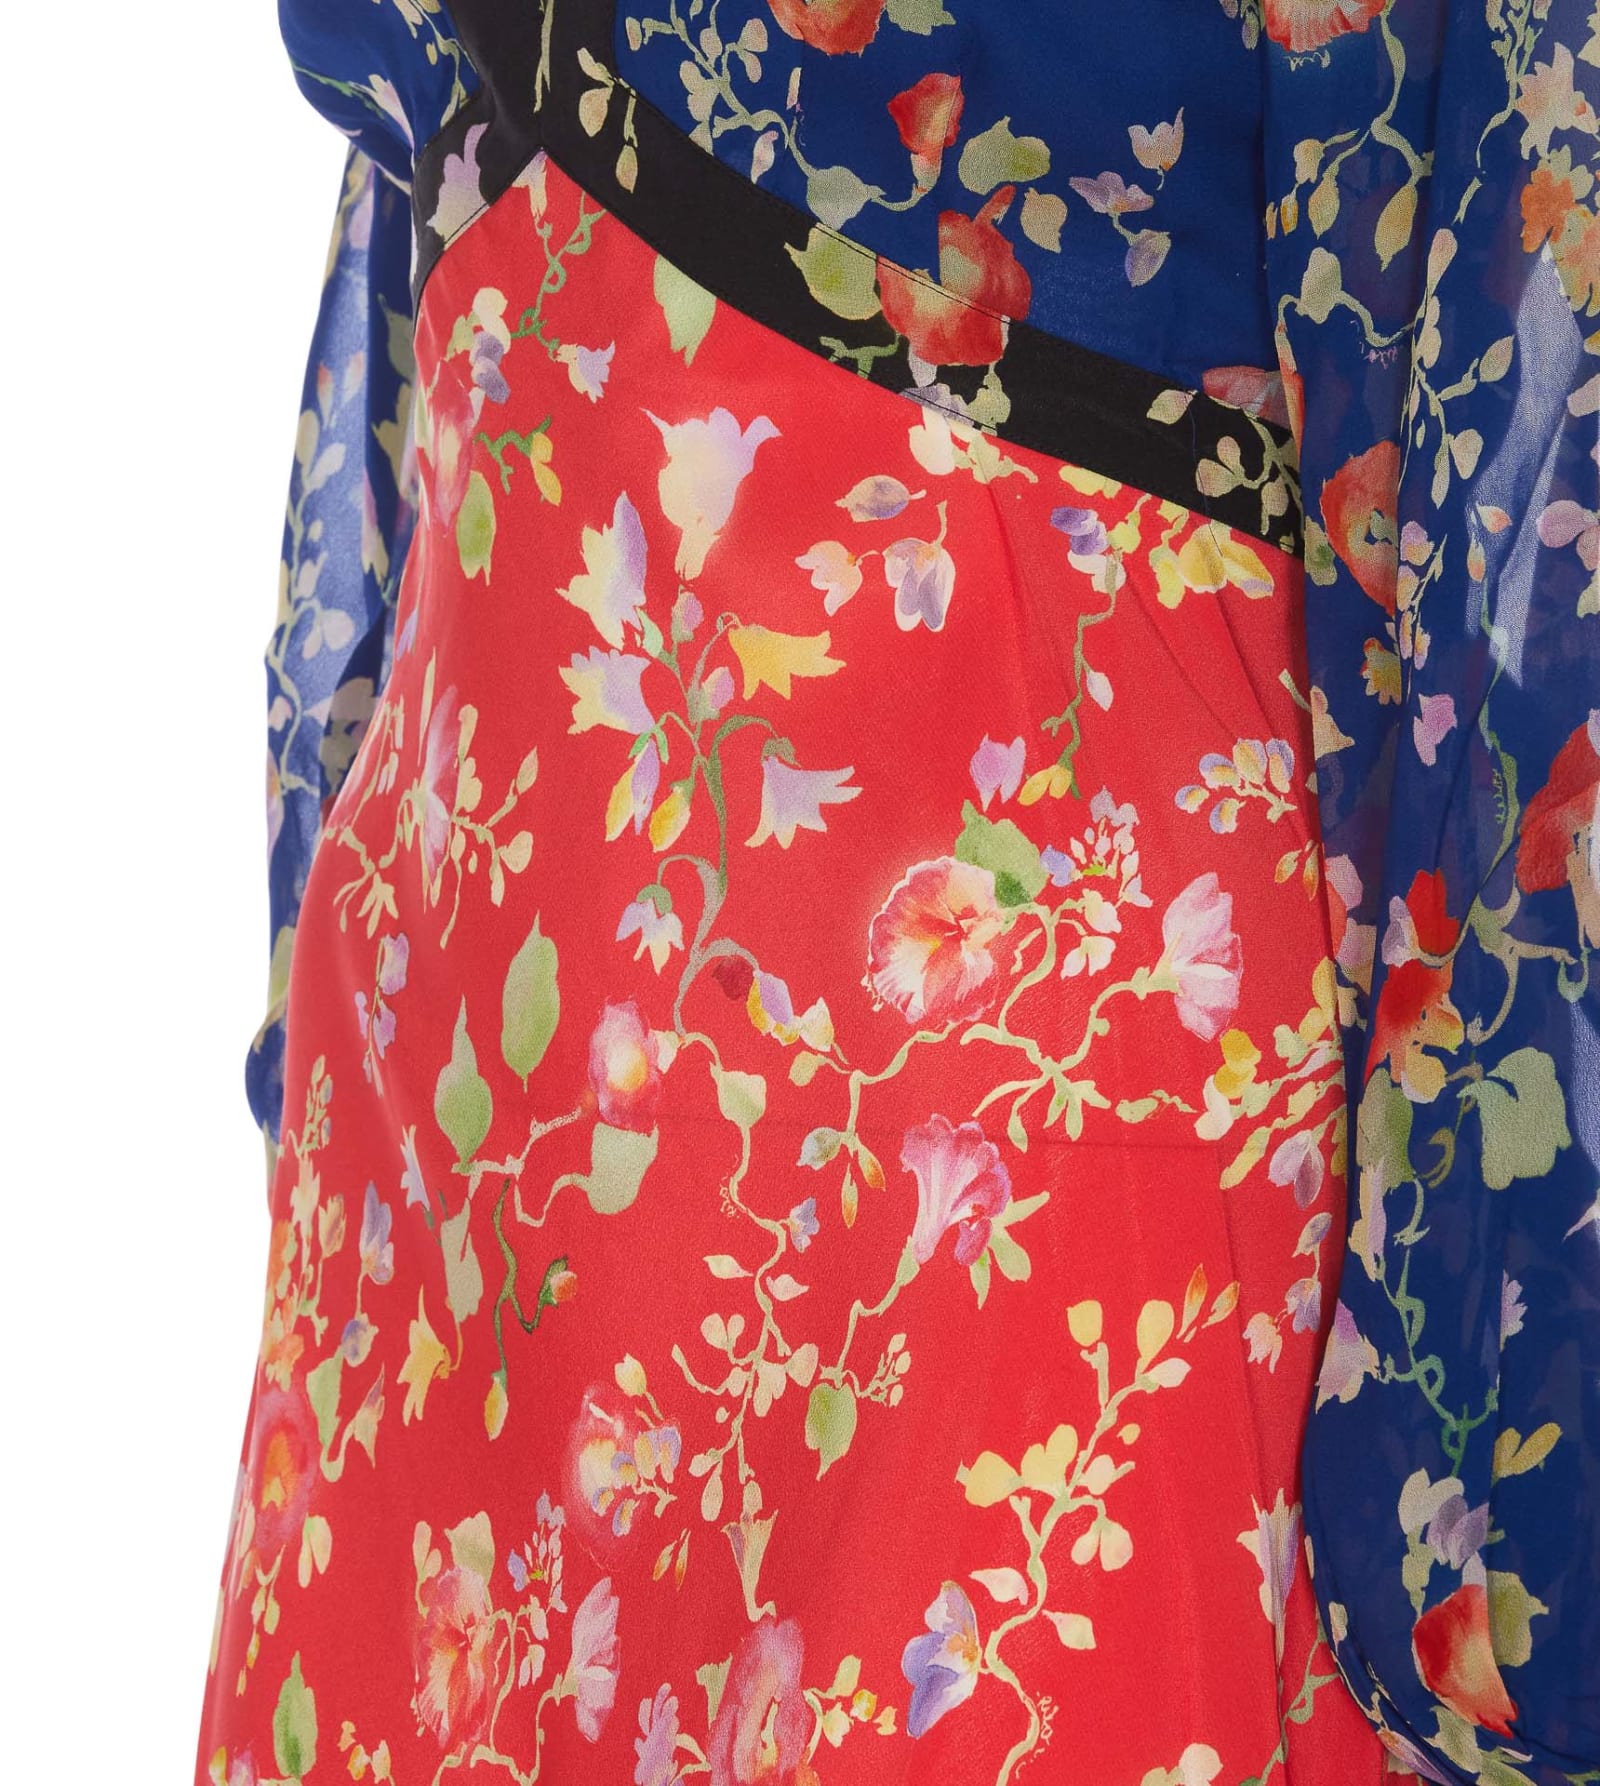 Shop Rixo London Ayla Midi Dress In Multicolour